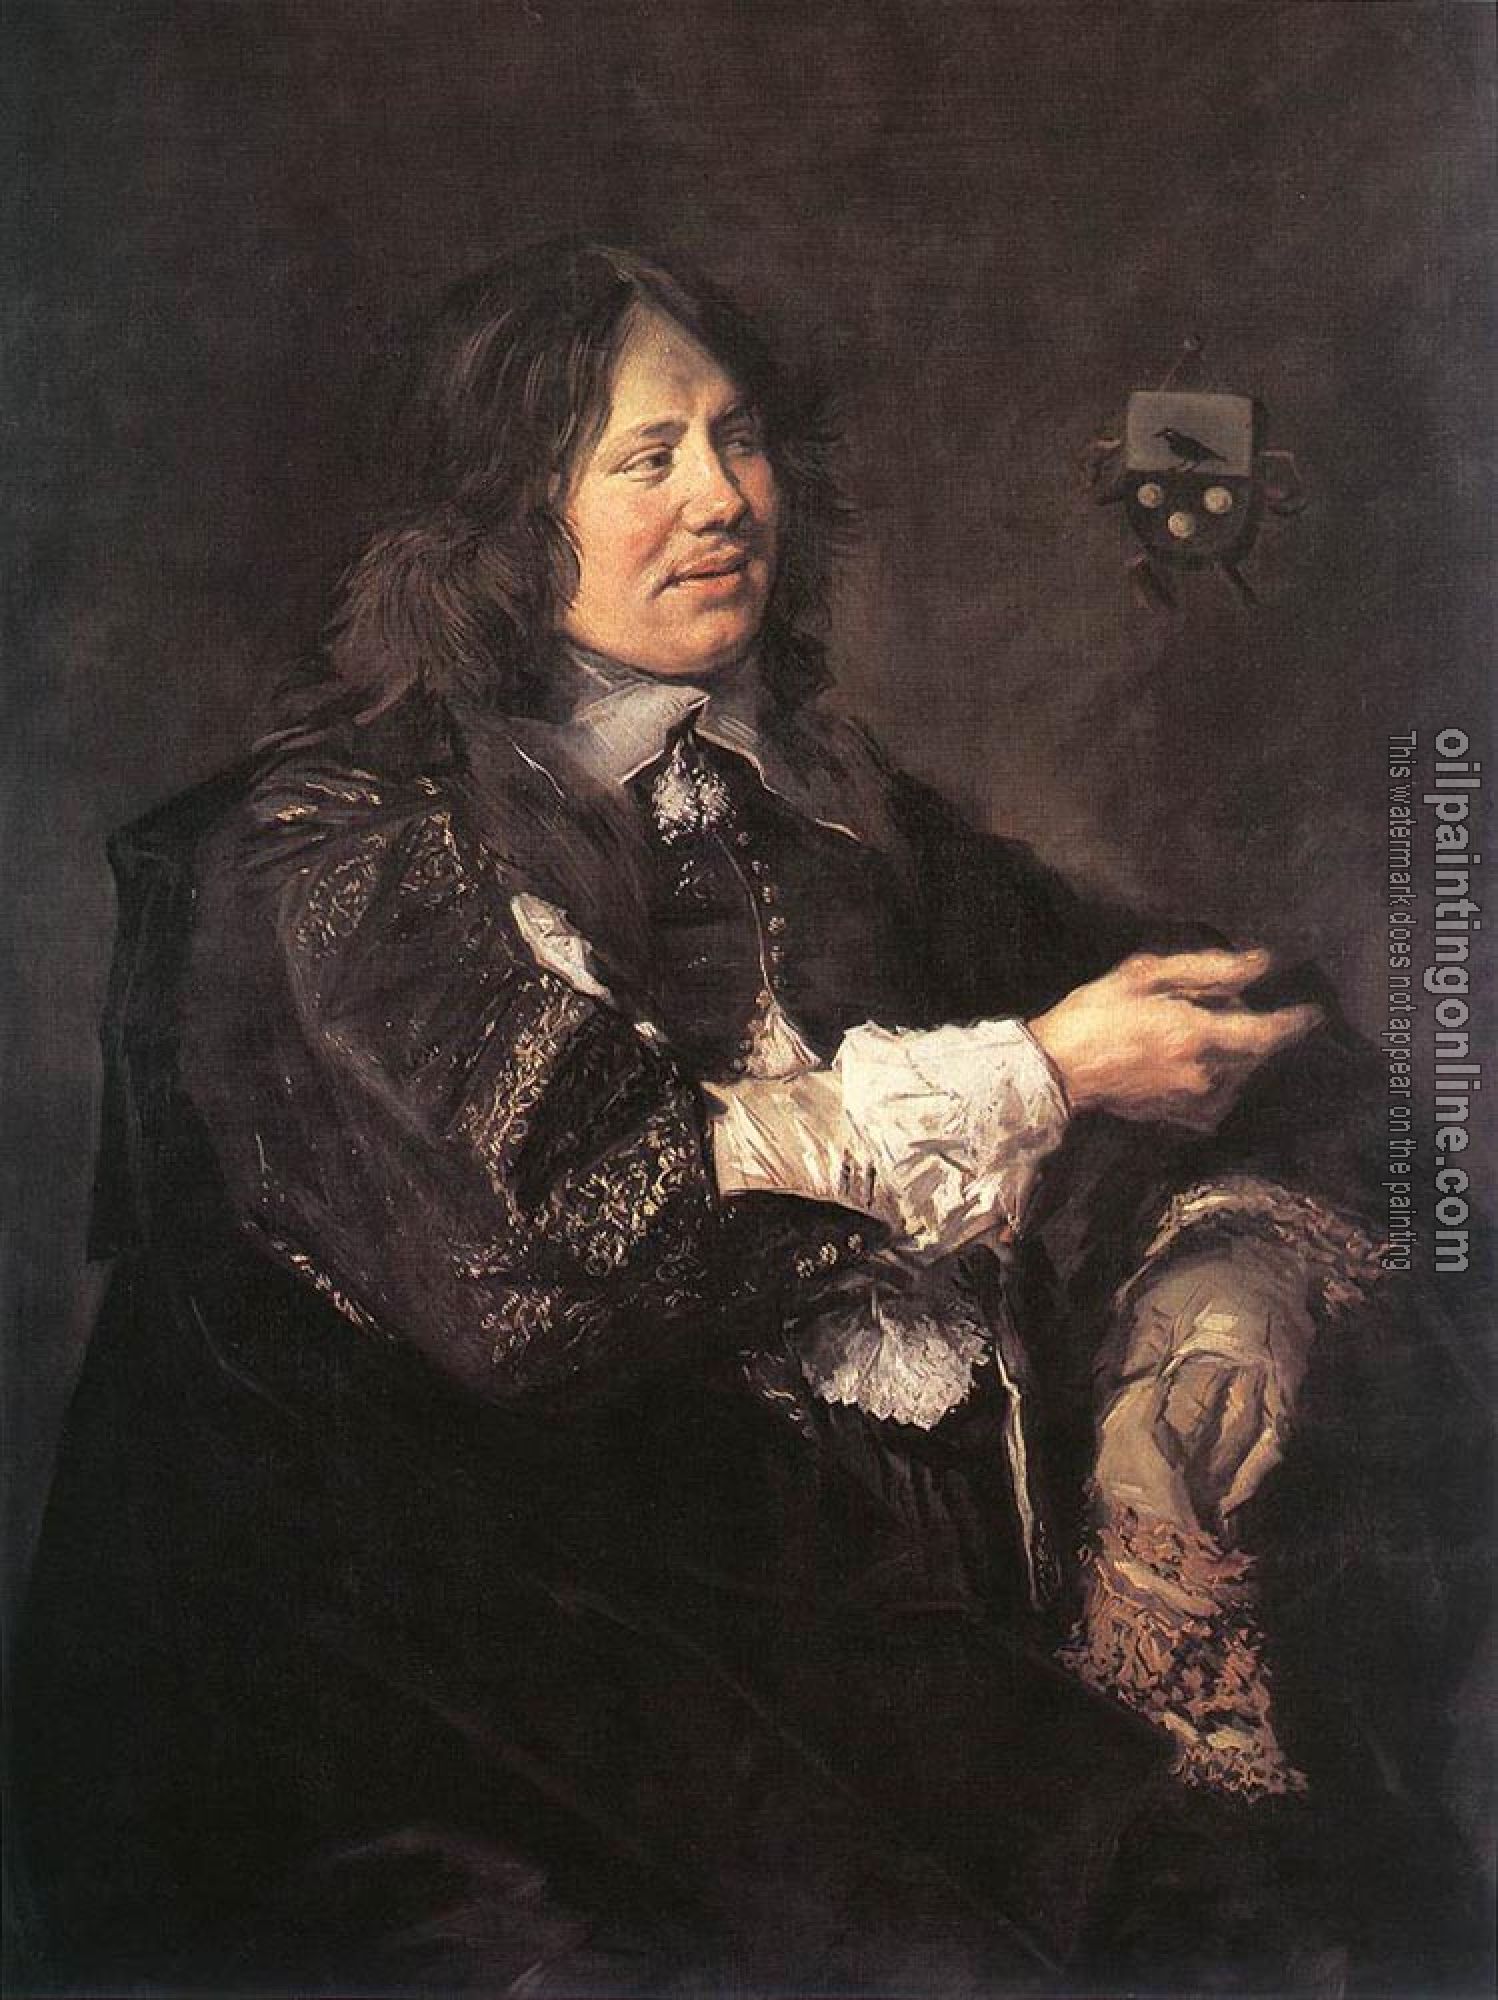 Hals, Frans - Stephanus Geraerdts